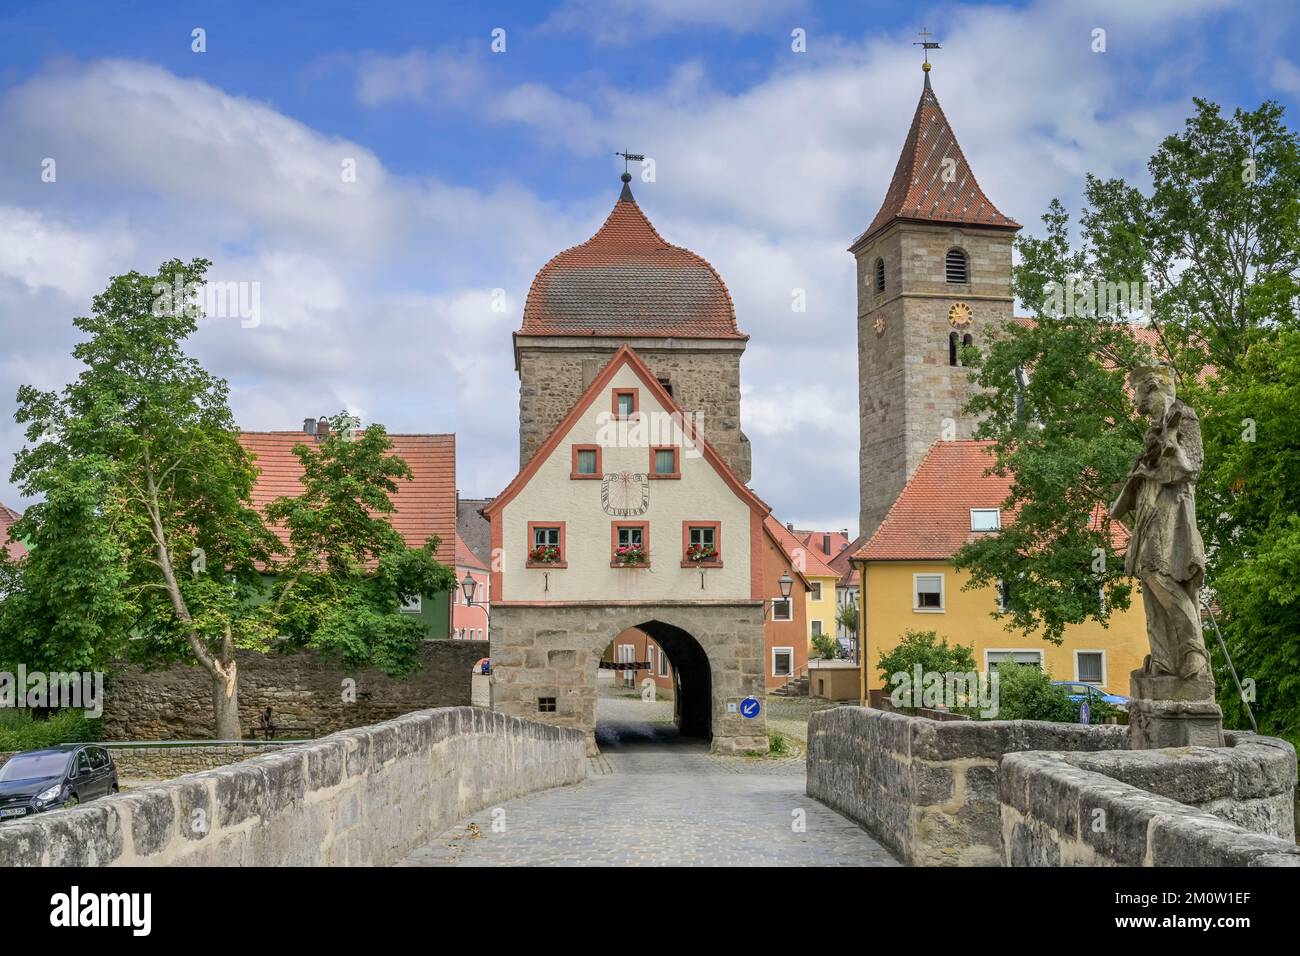 Altmühlbrücke, Unteres Tor, Katholische Pfarrkirche St Jakobus, Ornbau, Bayern, Deutschland Foto Stock